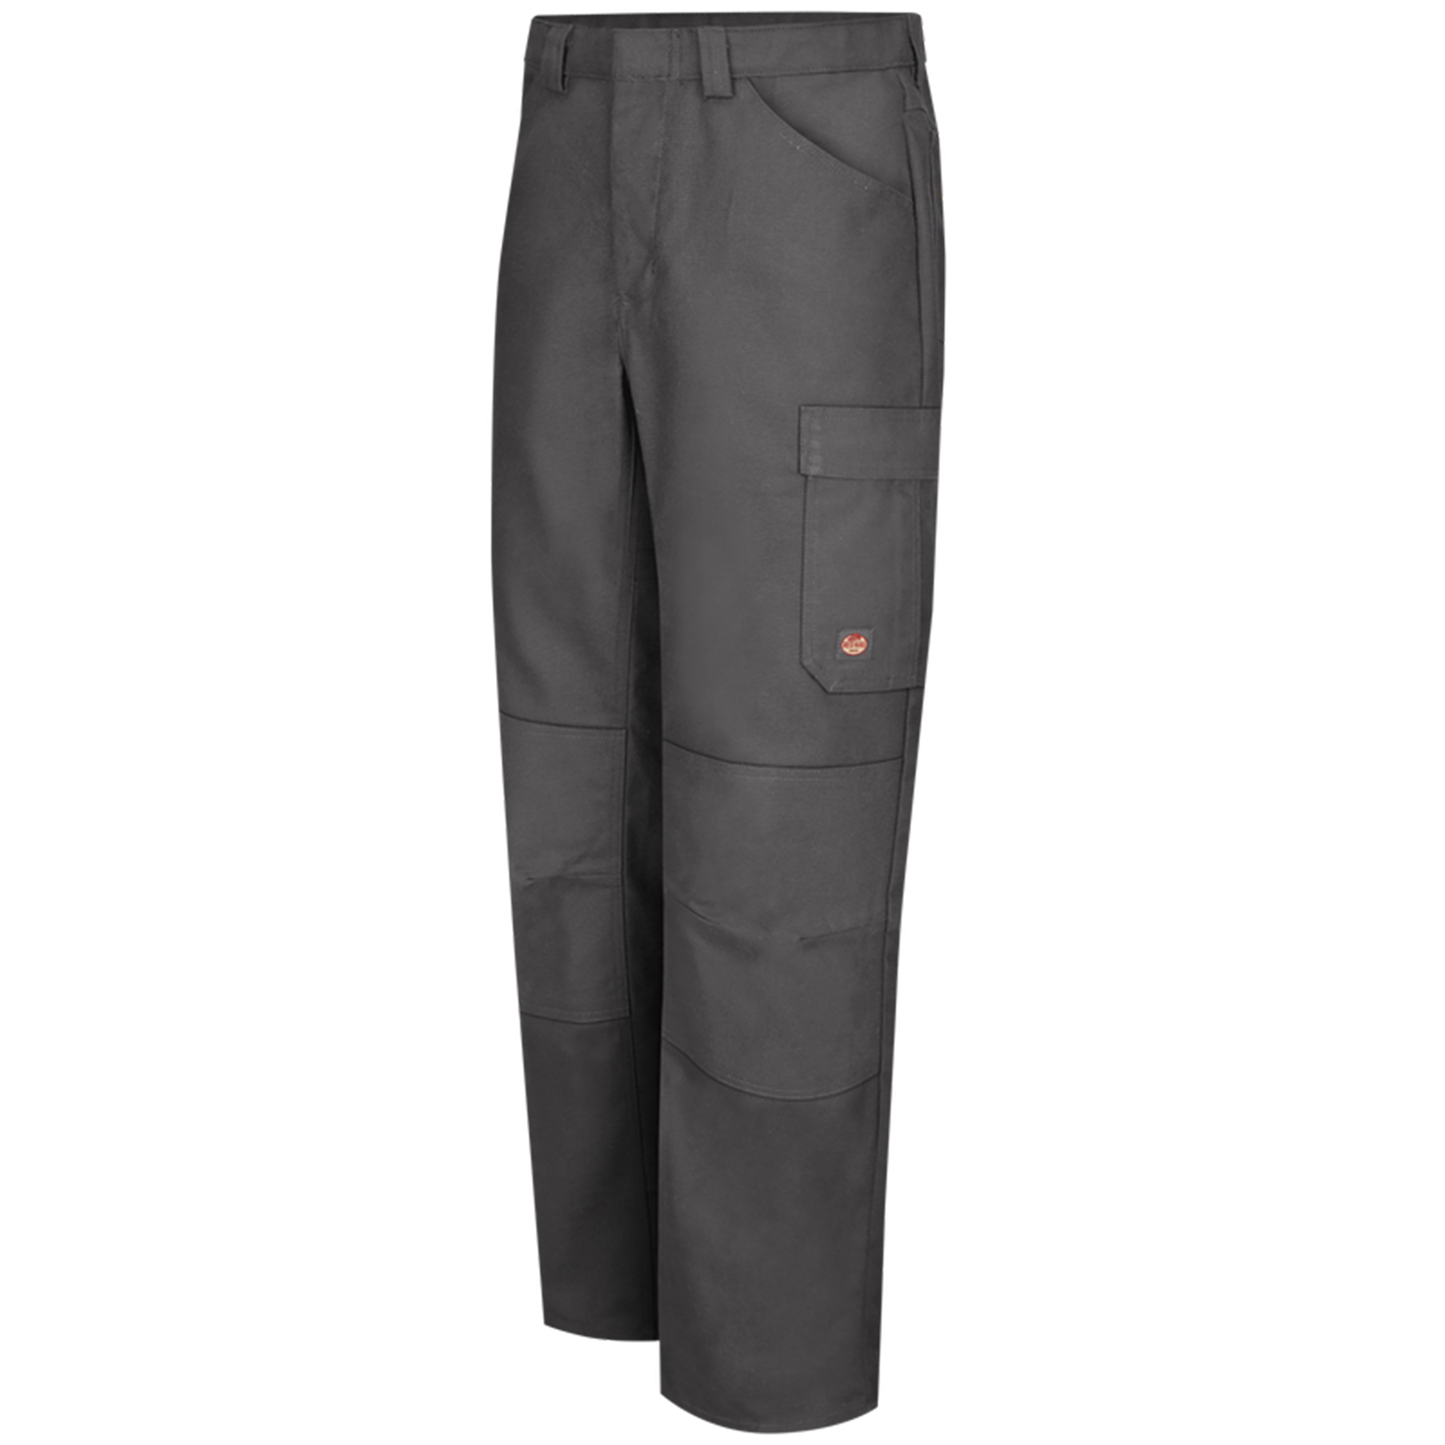 Red Kap - Shop Pants - PT2A-Charcoal